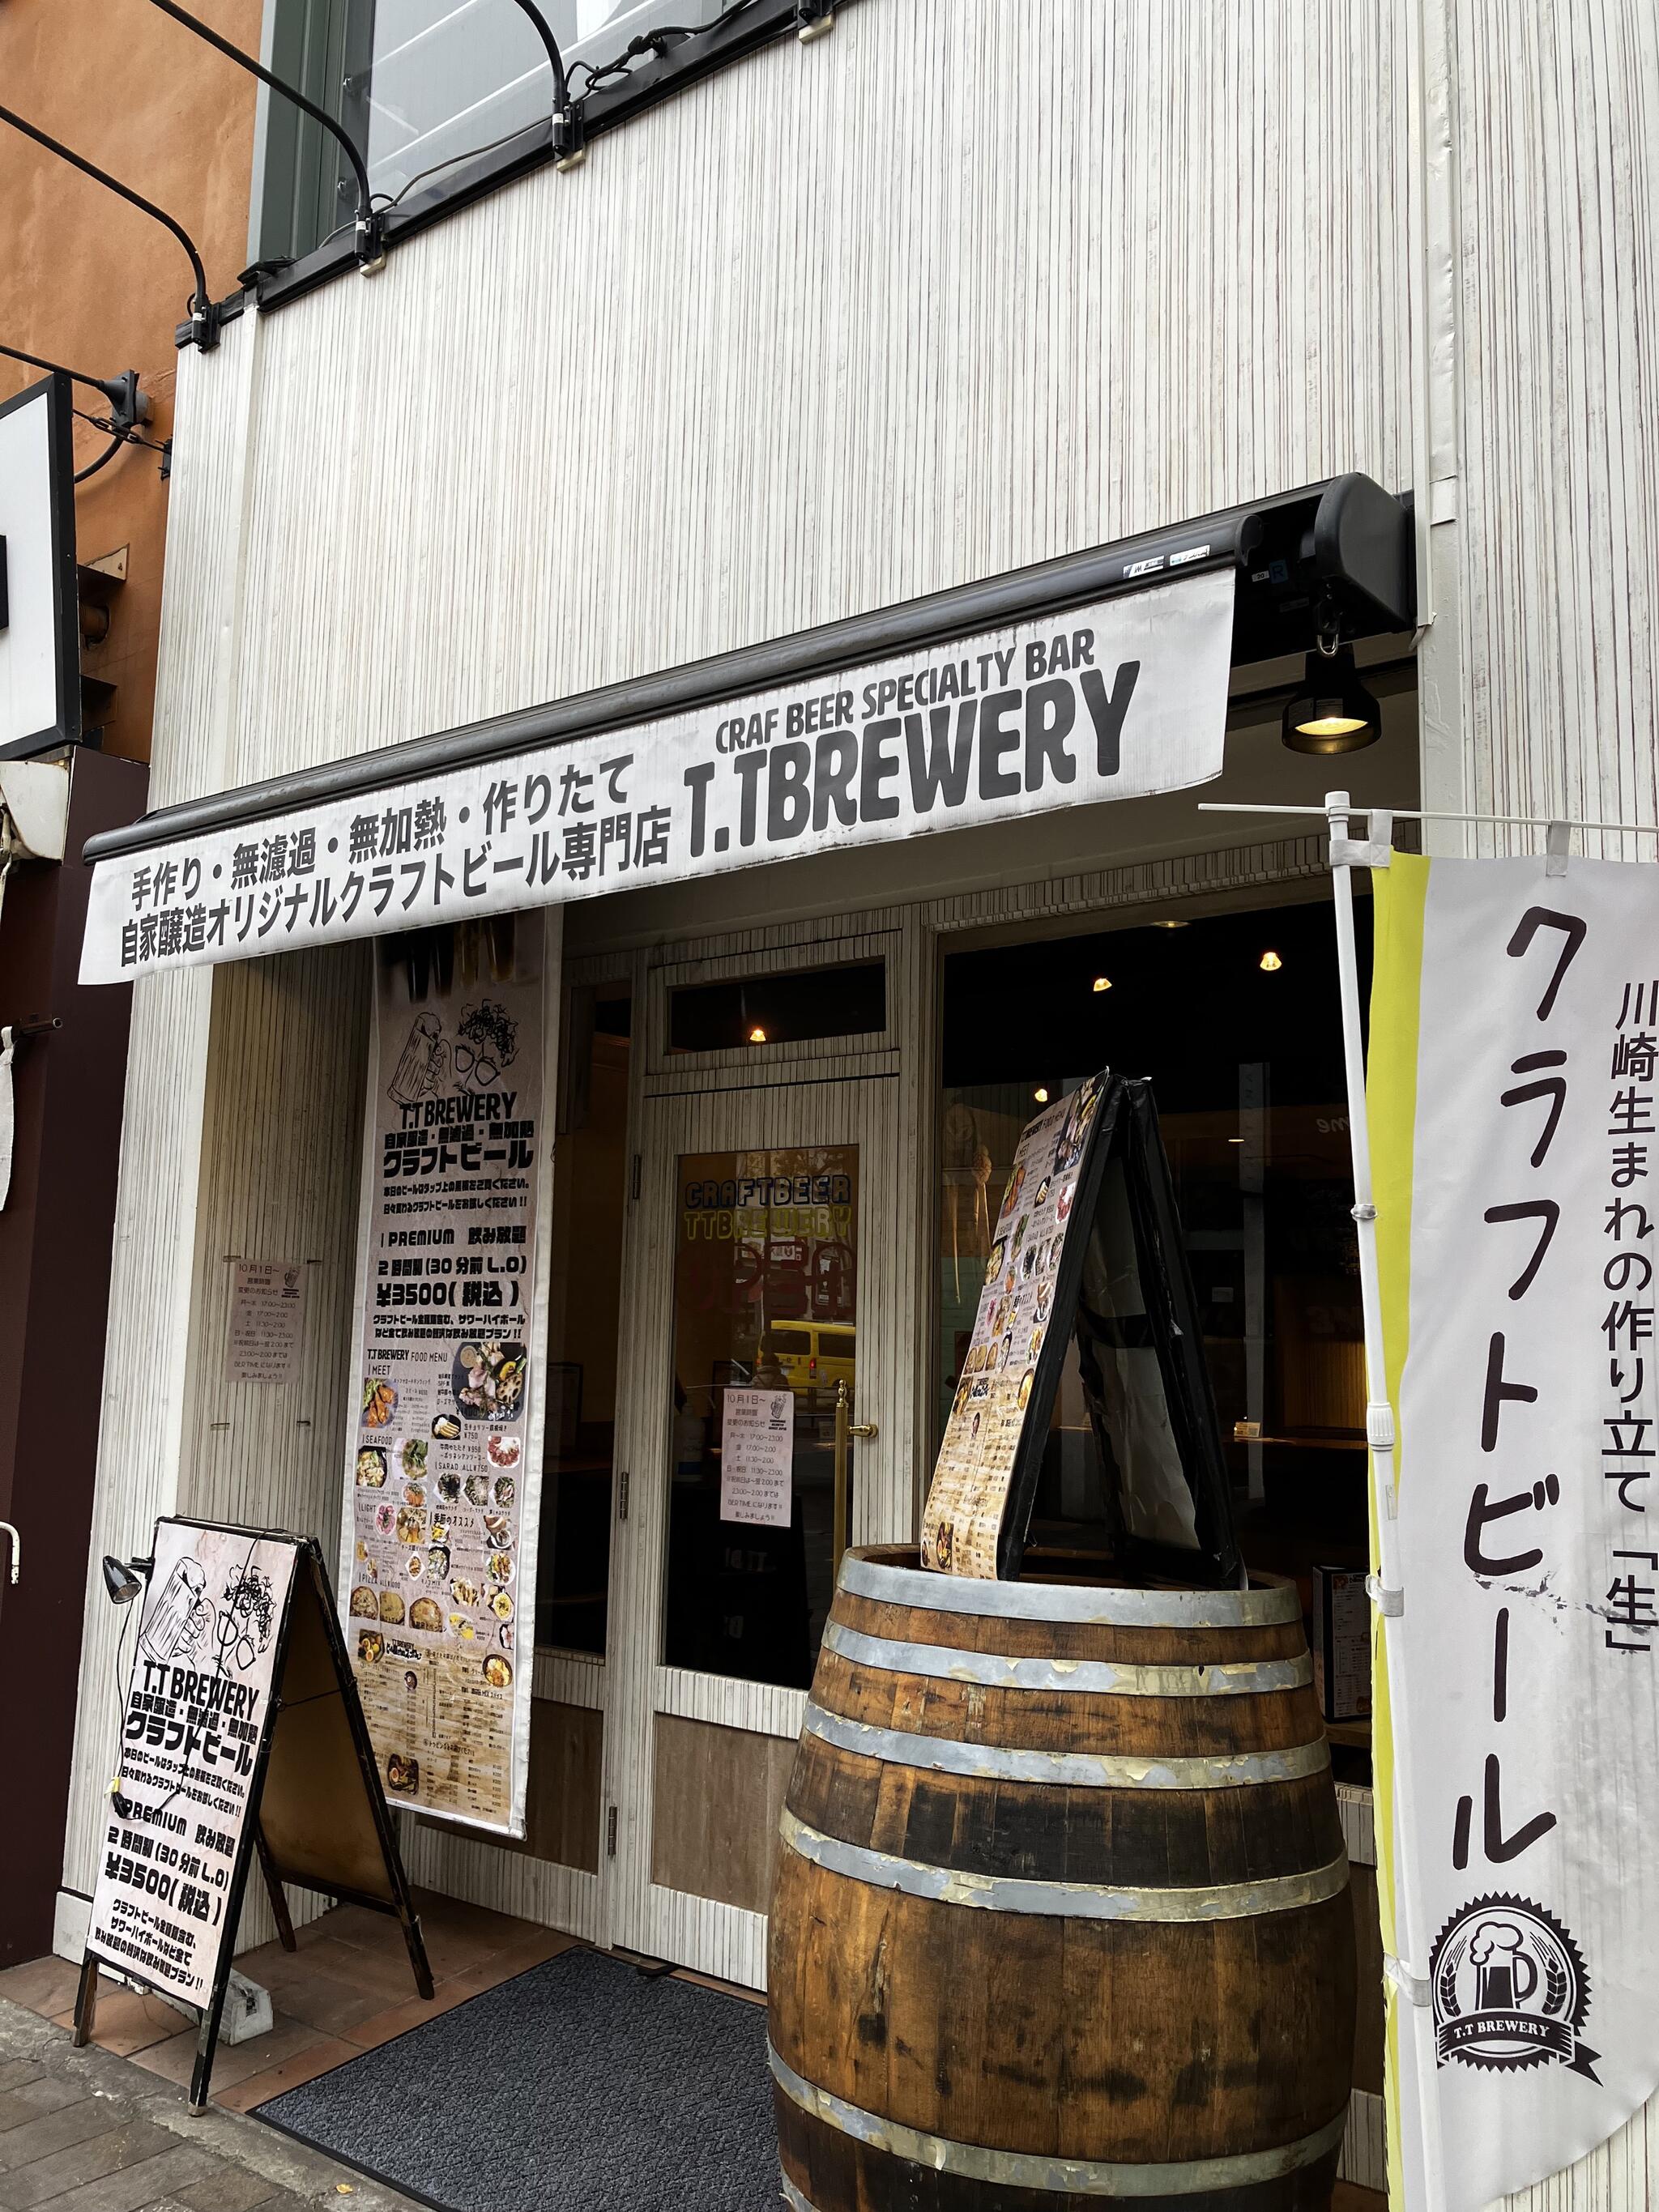 T.T BREWERY(ティーティーブルワリー) 川崎チネチッタ通り店の代表写真3